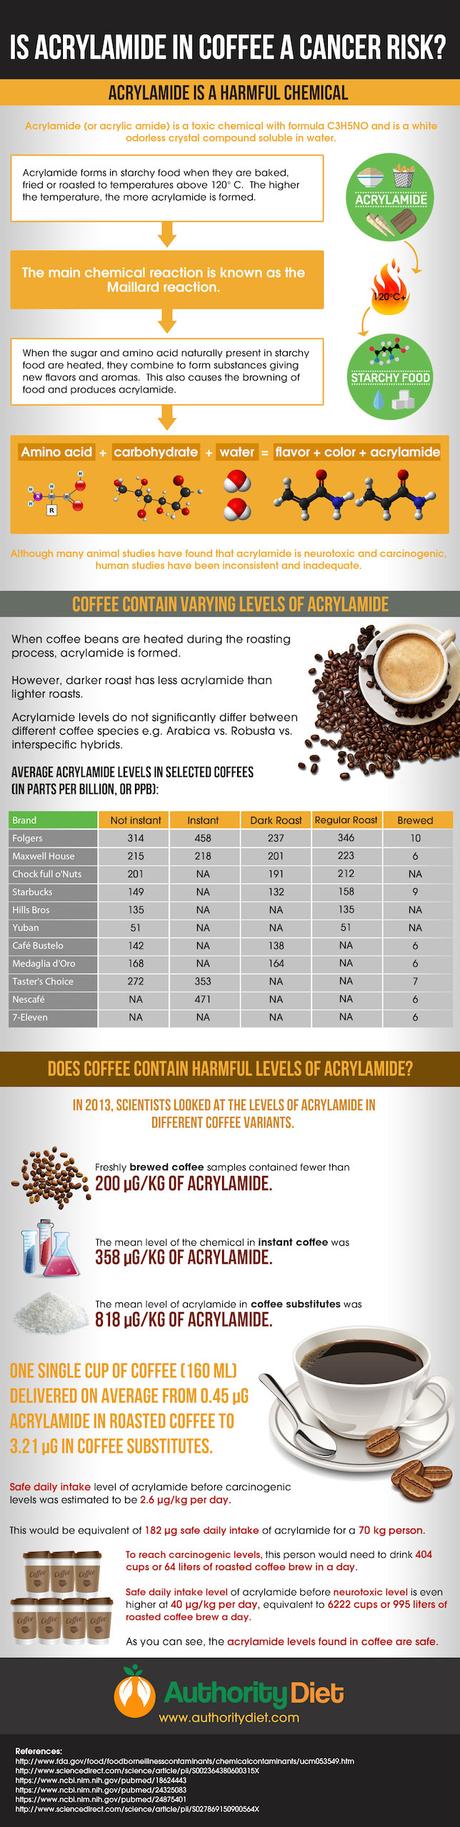 Coffee and acrylamide infographic